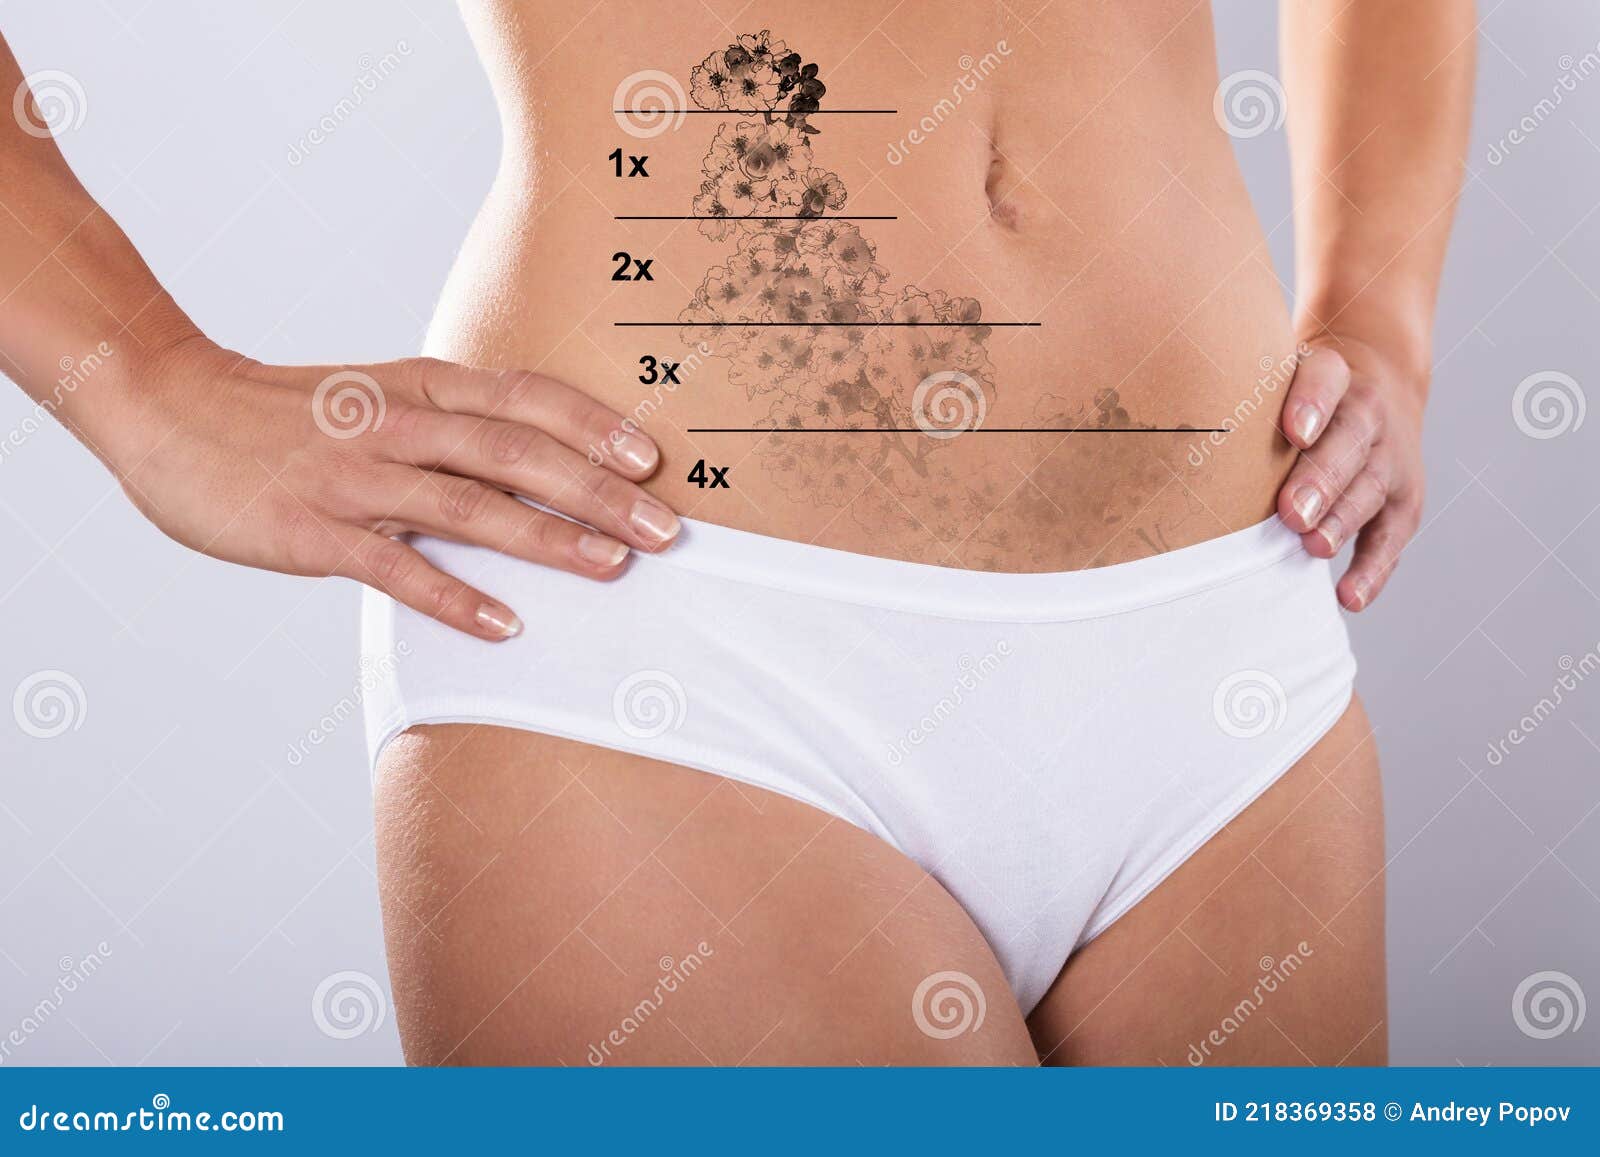 Female Stomach Tattoos